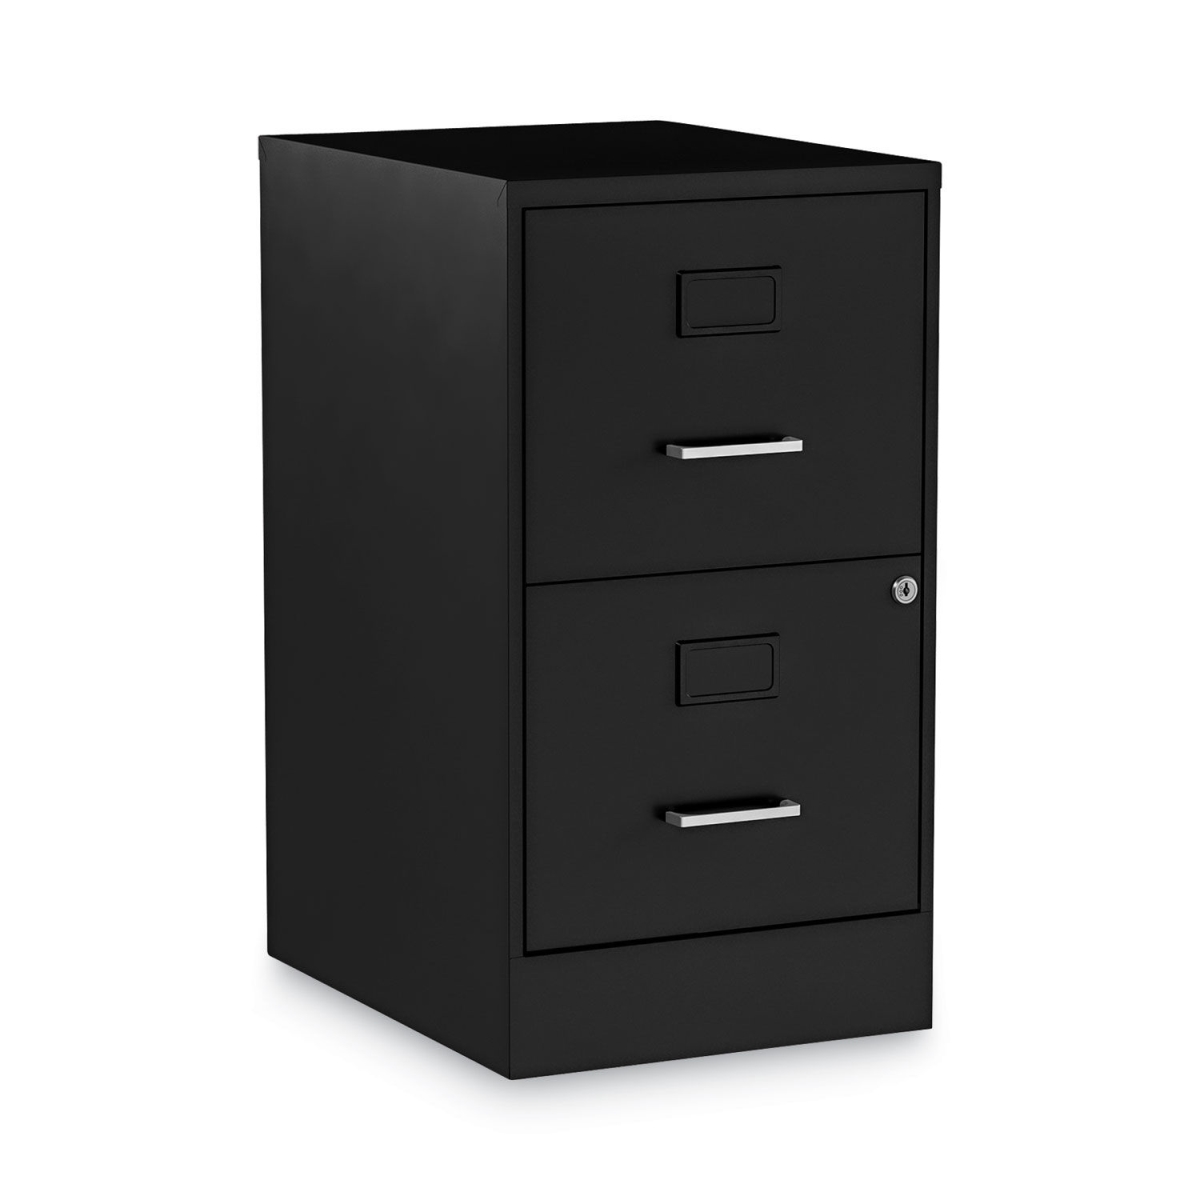 UPC 042167000080 product image for Alera 2806262 Letter Size 2 Drawers Soho Vertical File Cabinet, Black | upcitemdb.com